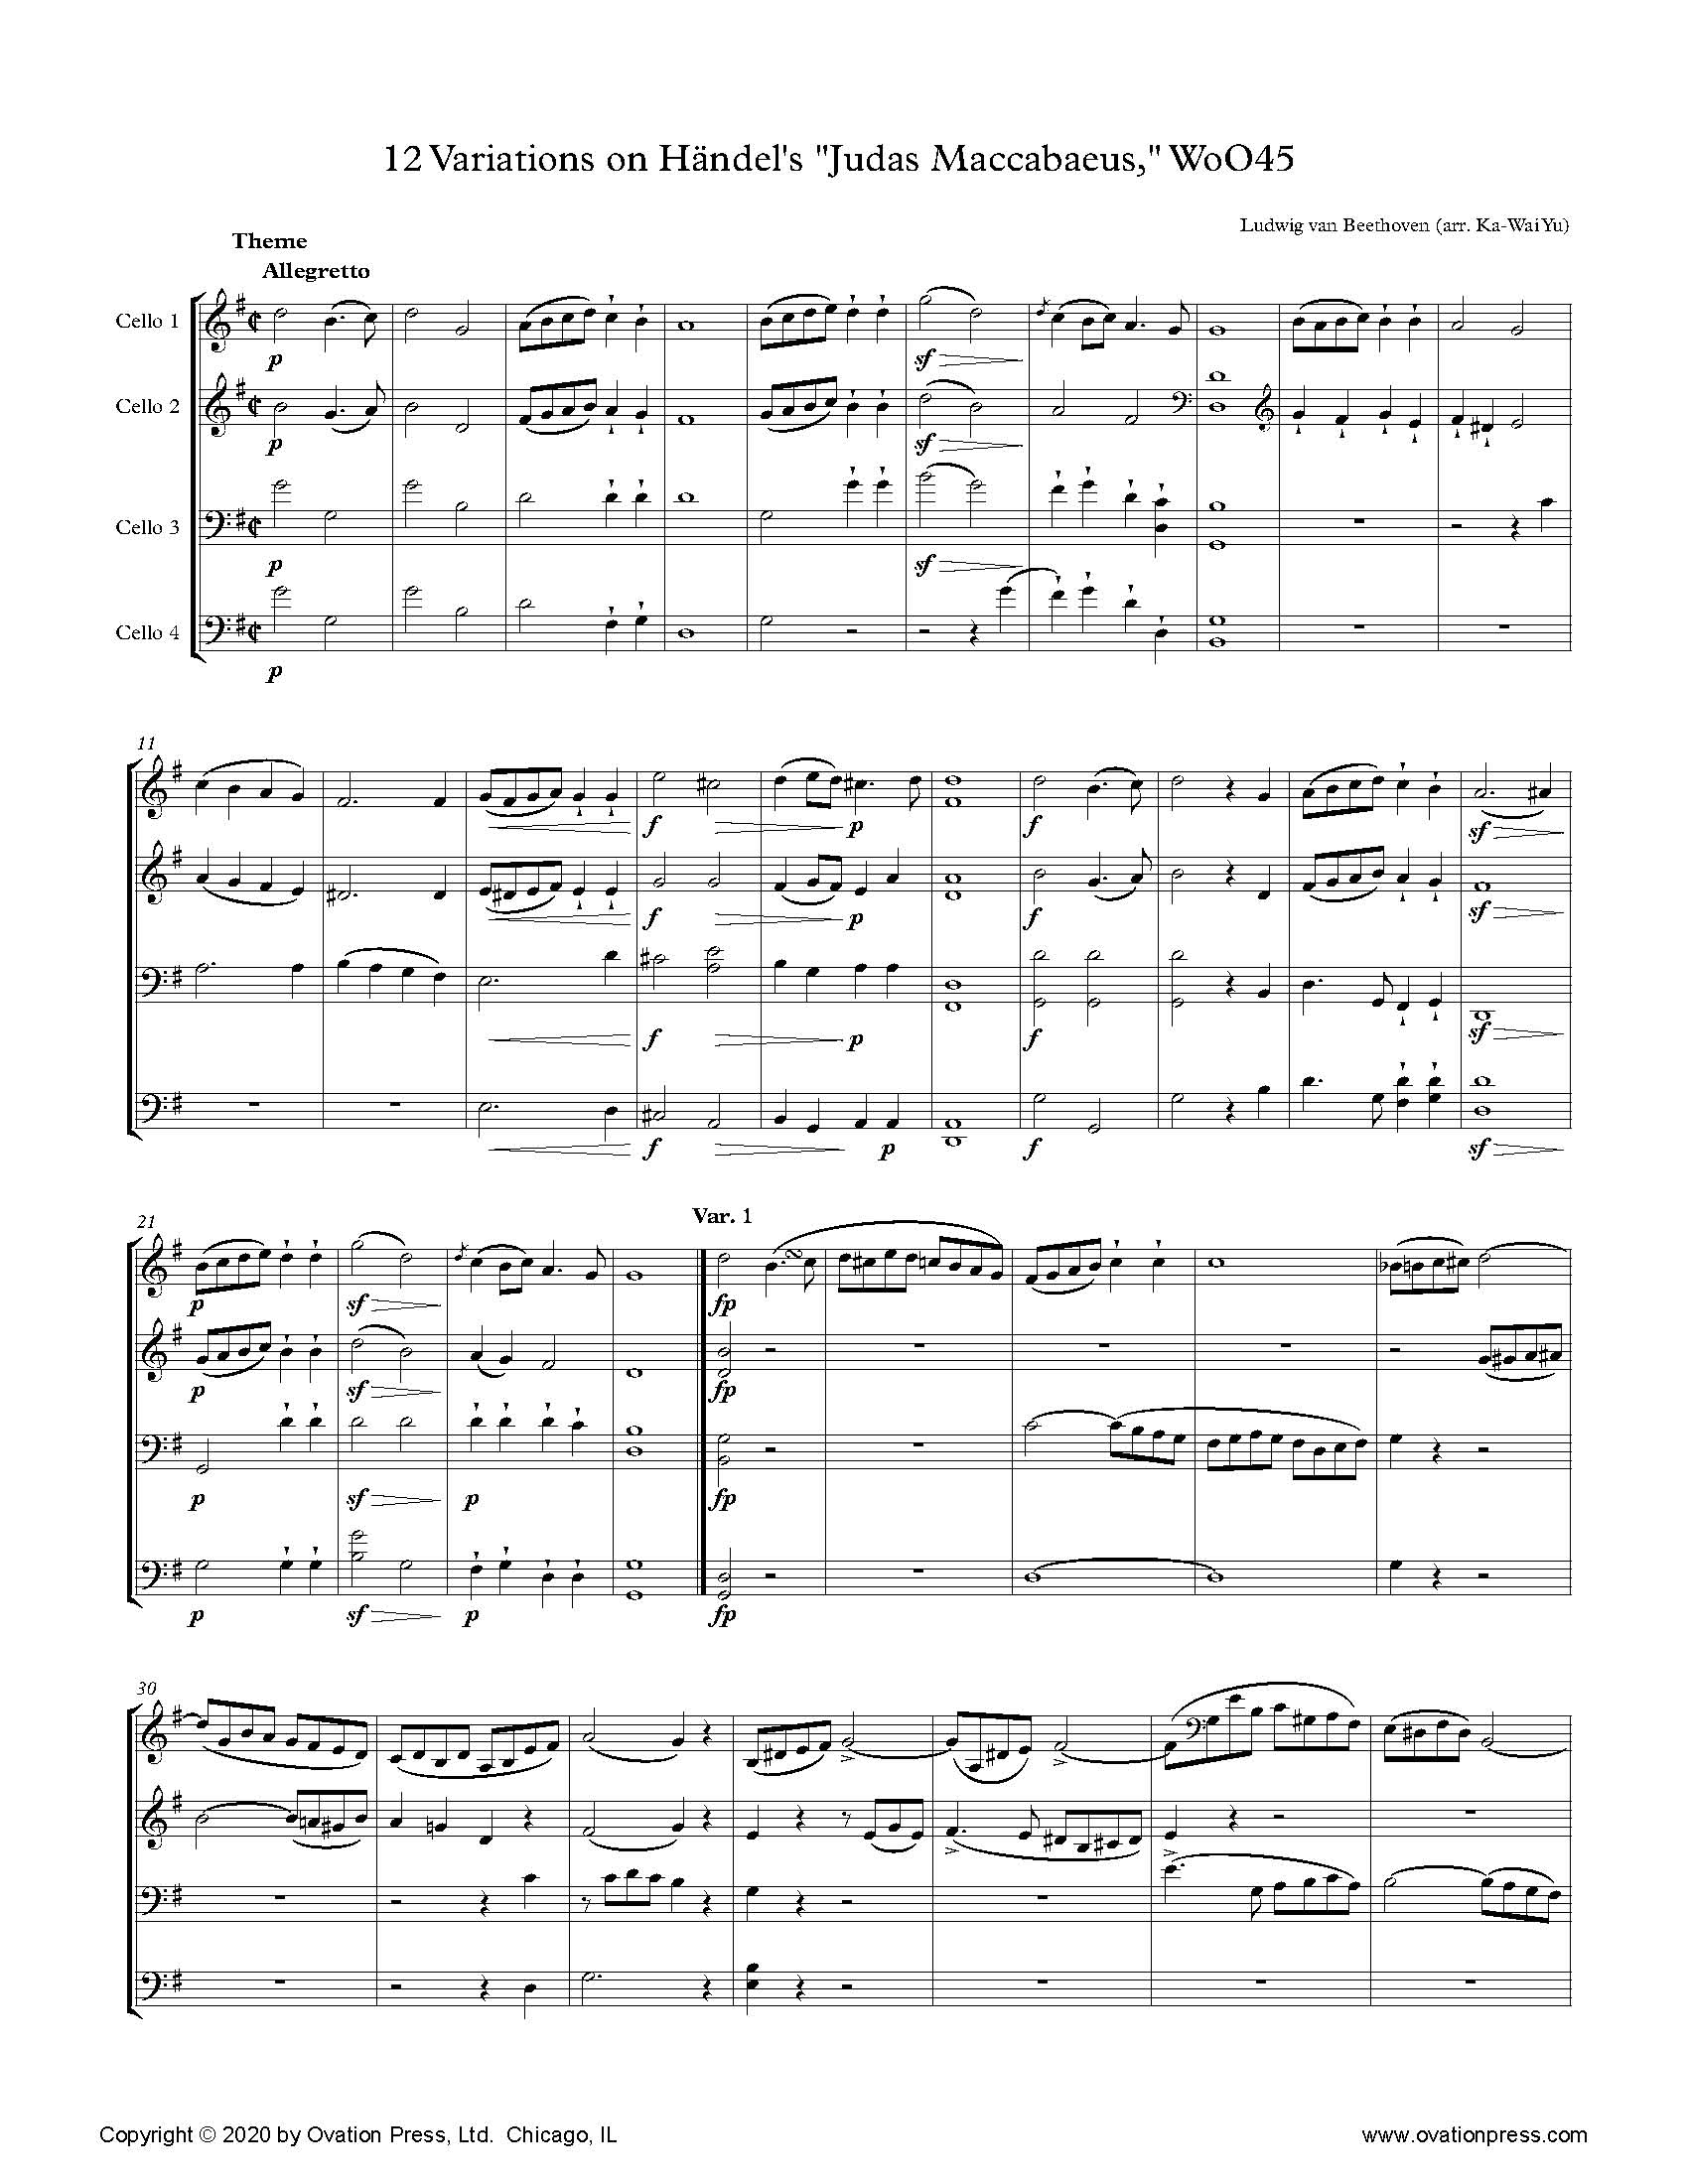 Beethoven 12 Variations on Händel's "Judas Maccabaeus" (for Cello Quartet)